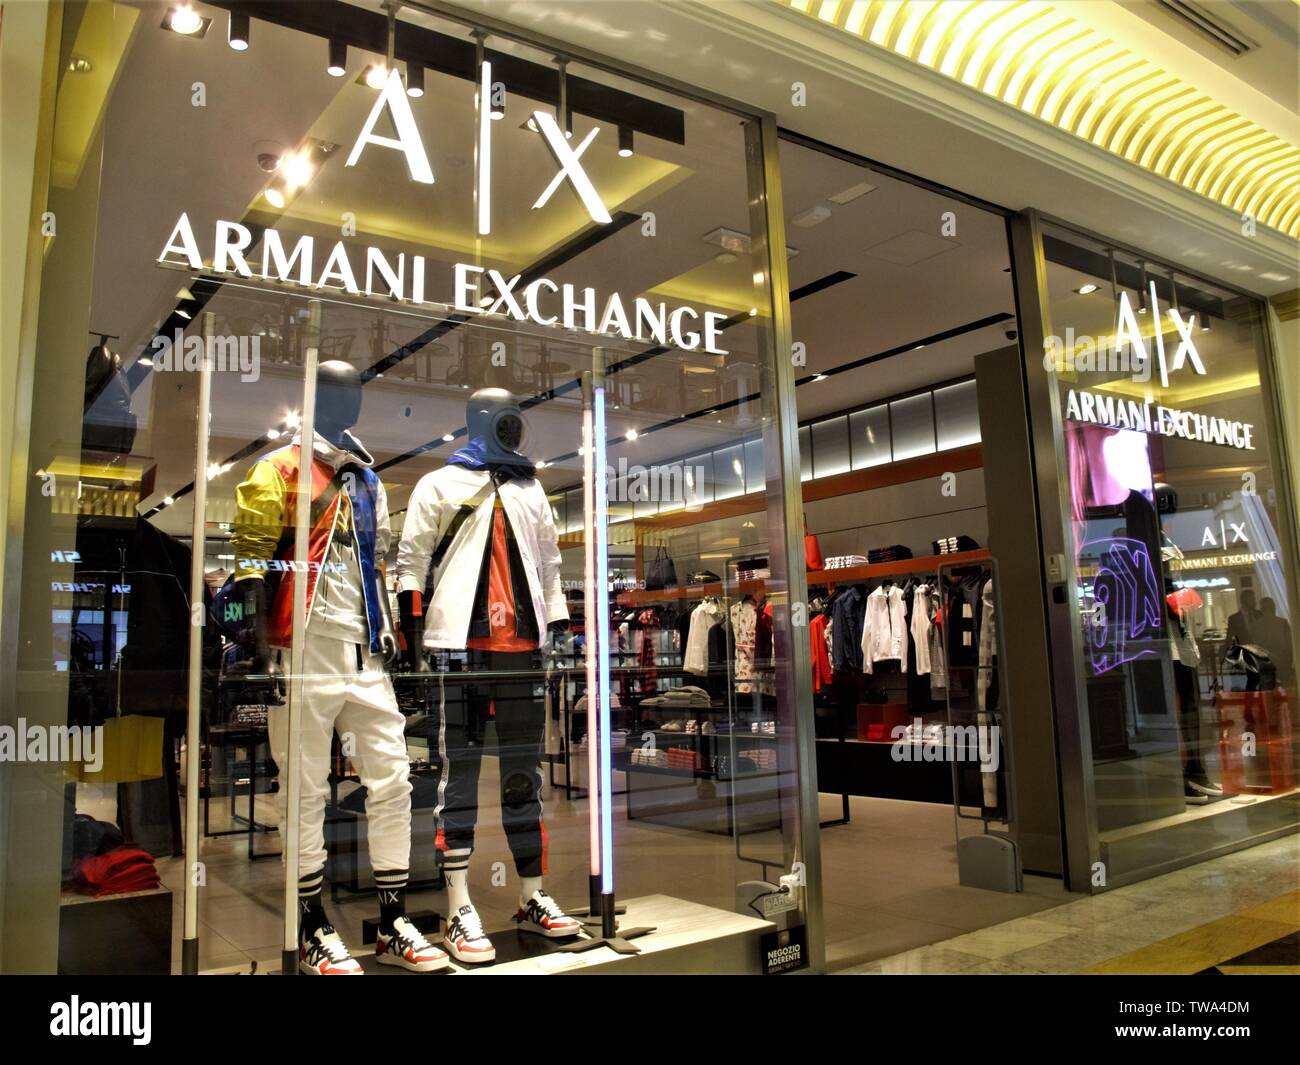 armani exchange galleria mall - 65% OFF 